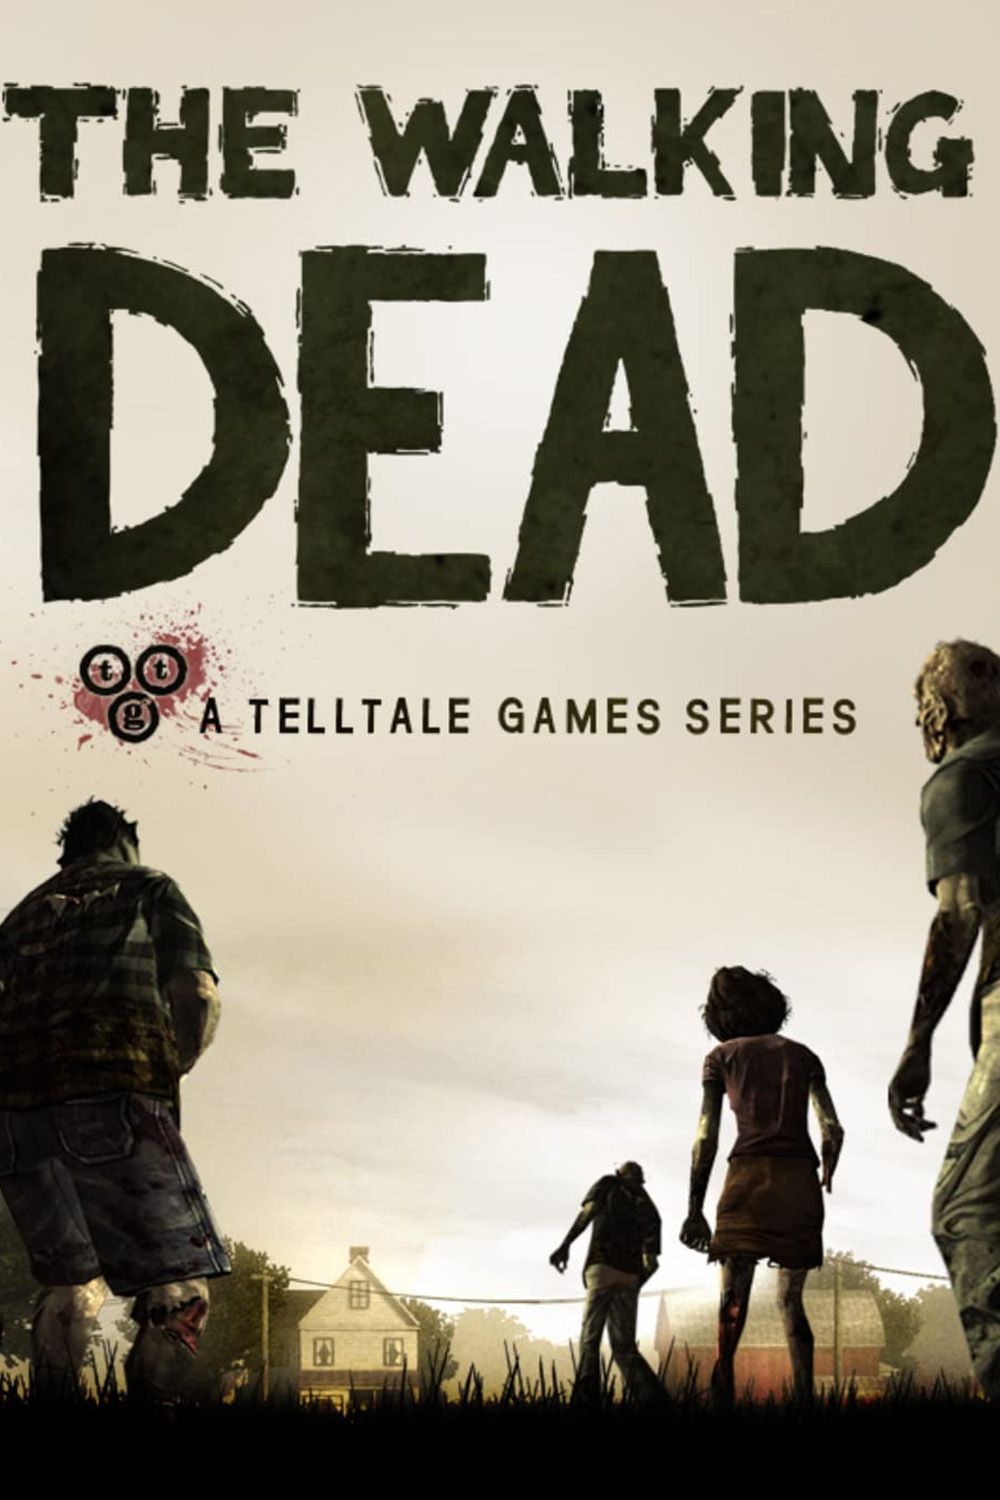 The Walking Dead game imdb